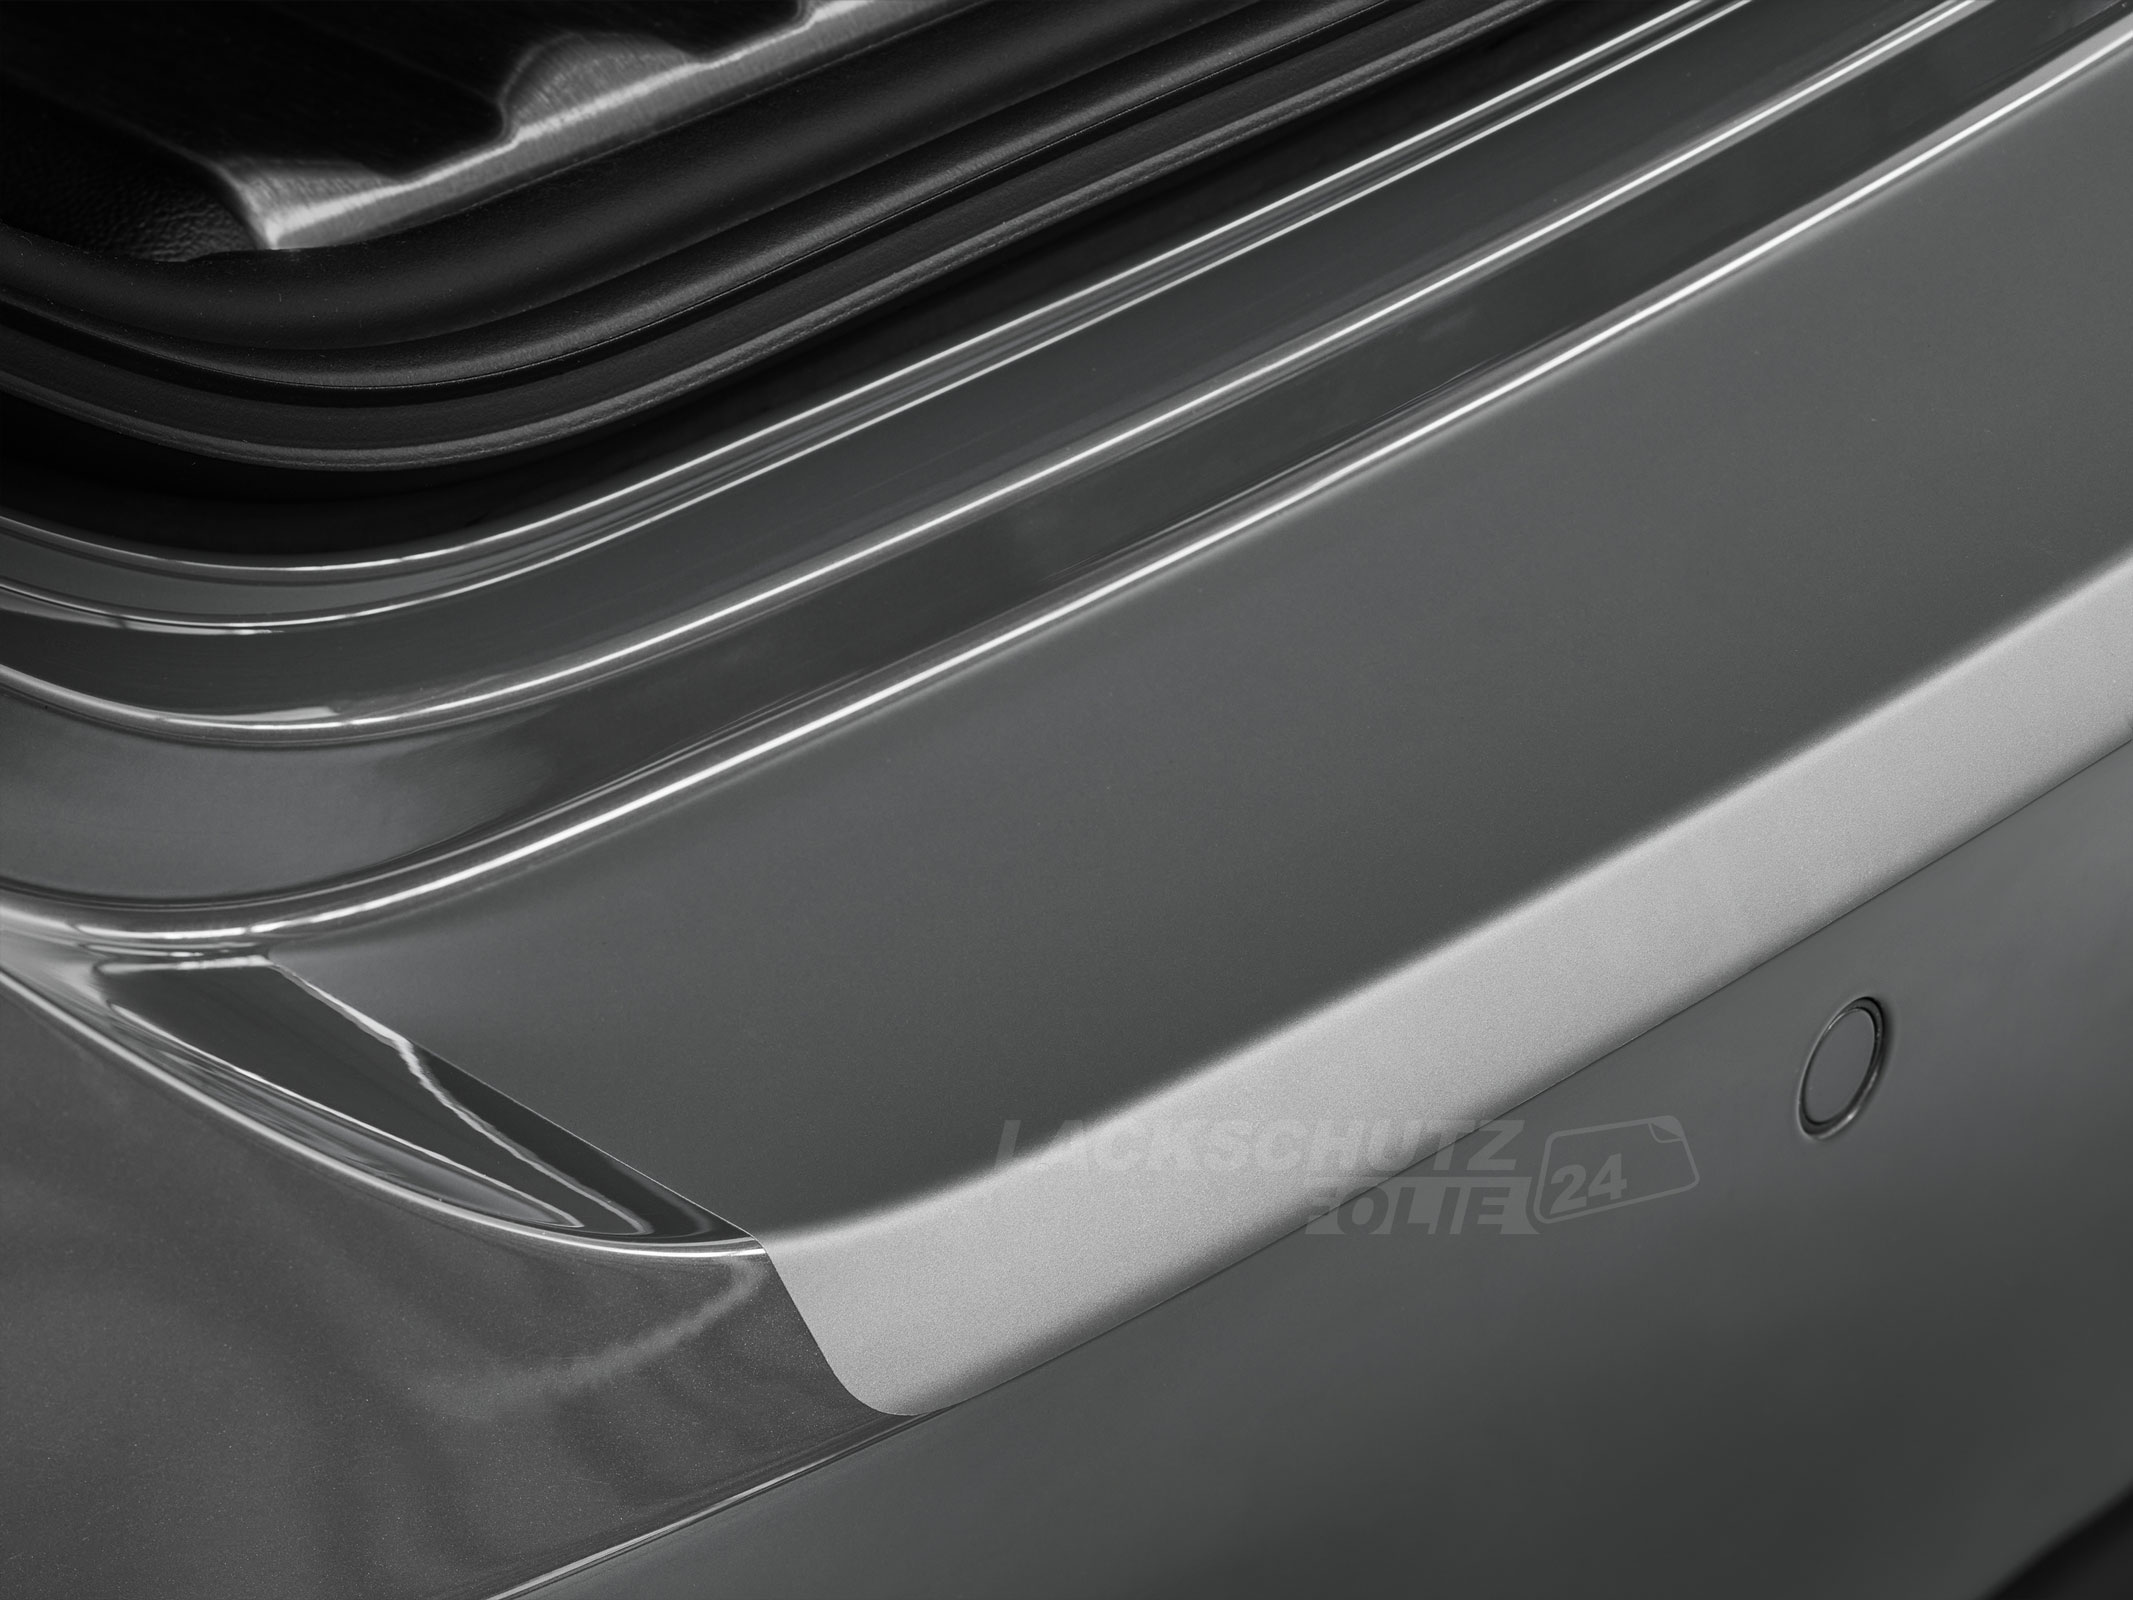 Ladekantenschutzfolie - Transparent Glatt MATT 110 µm stark  für Honda Civic 8. Generation, BJ 2005-2011